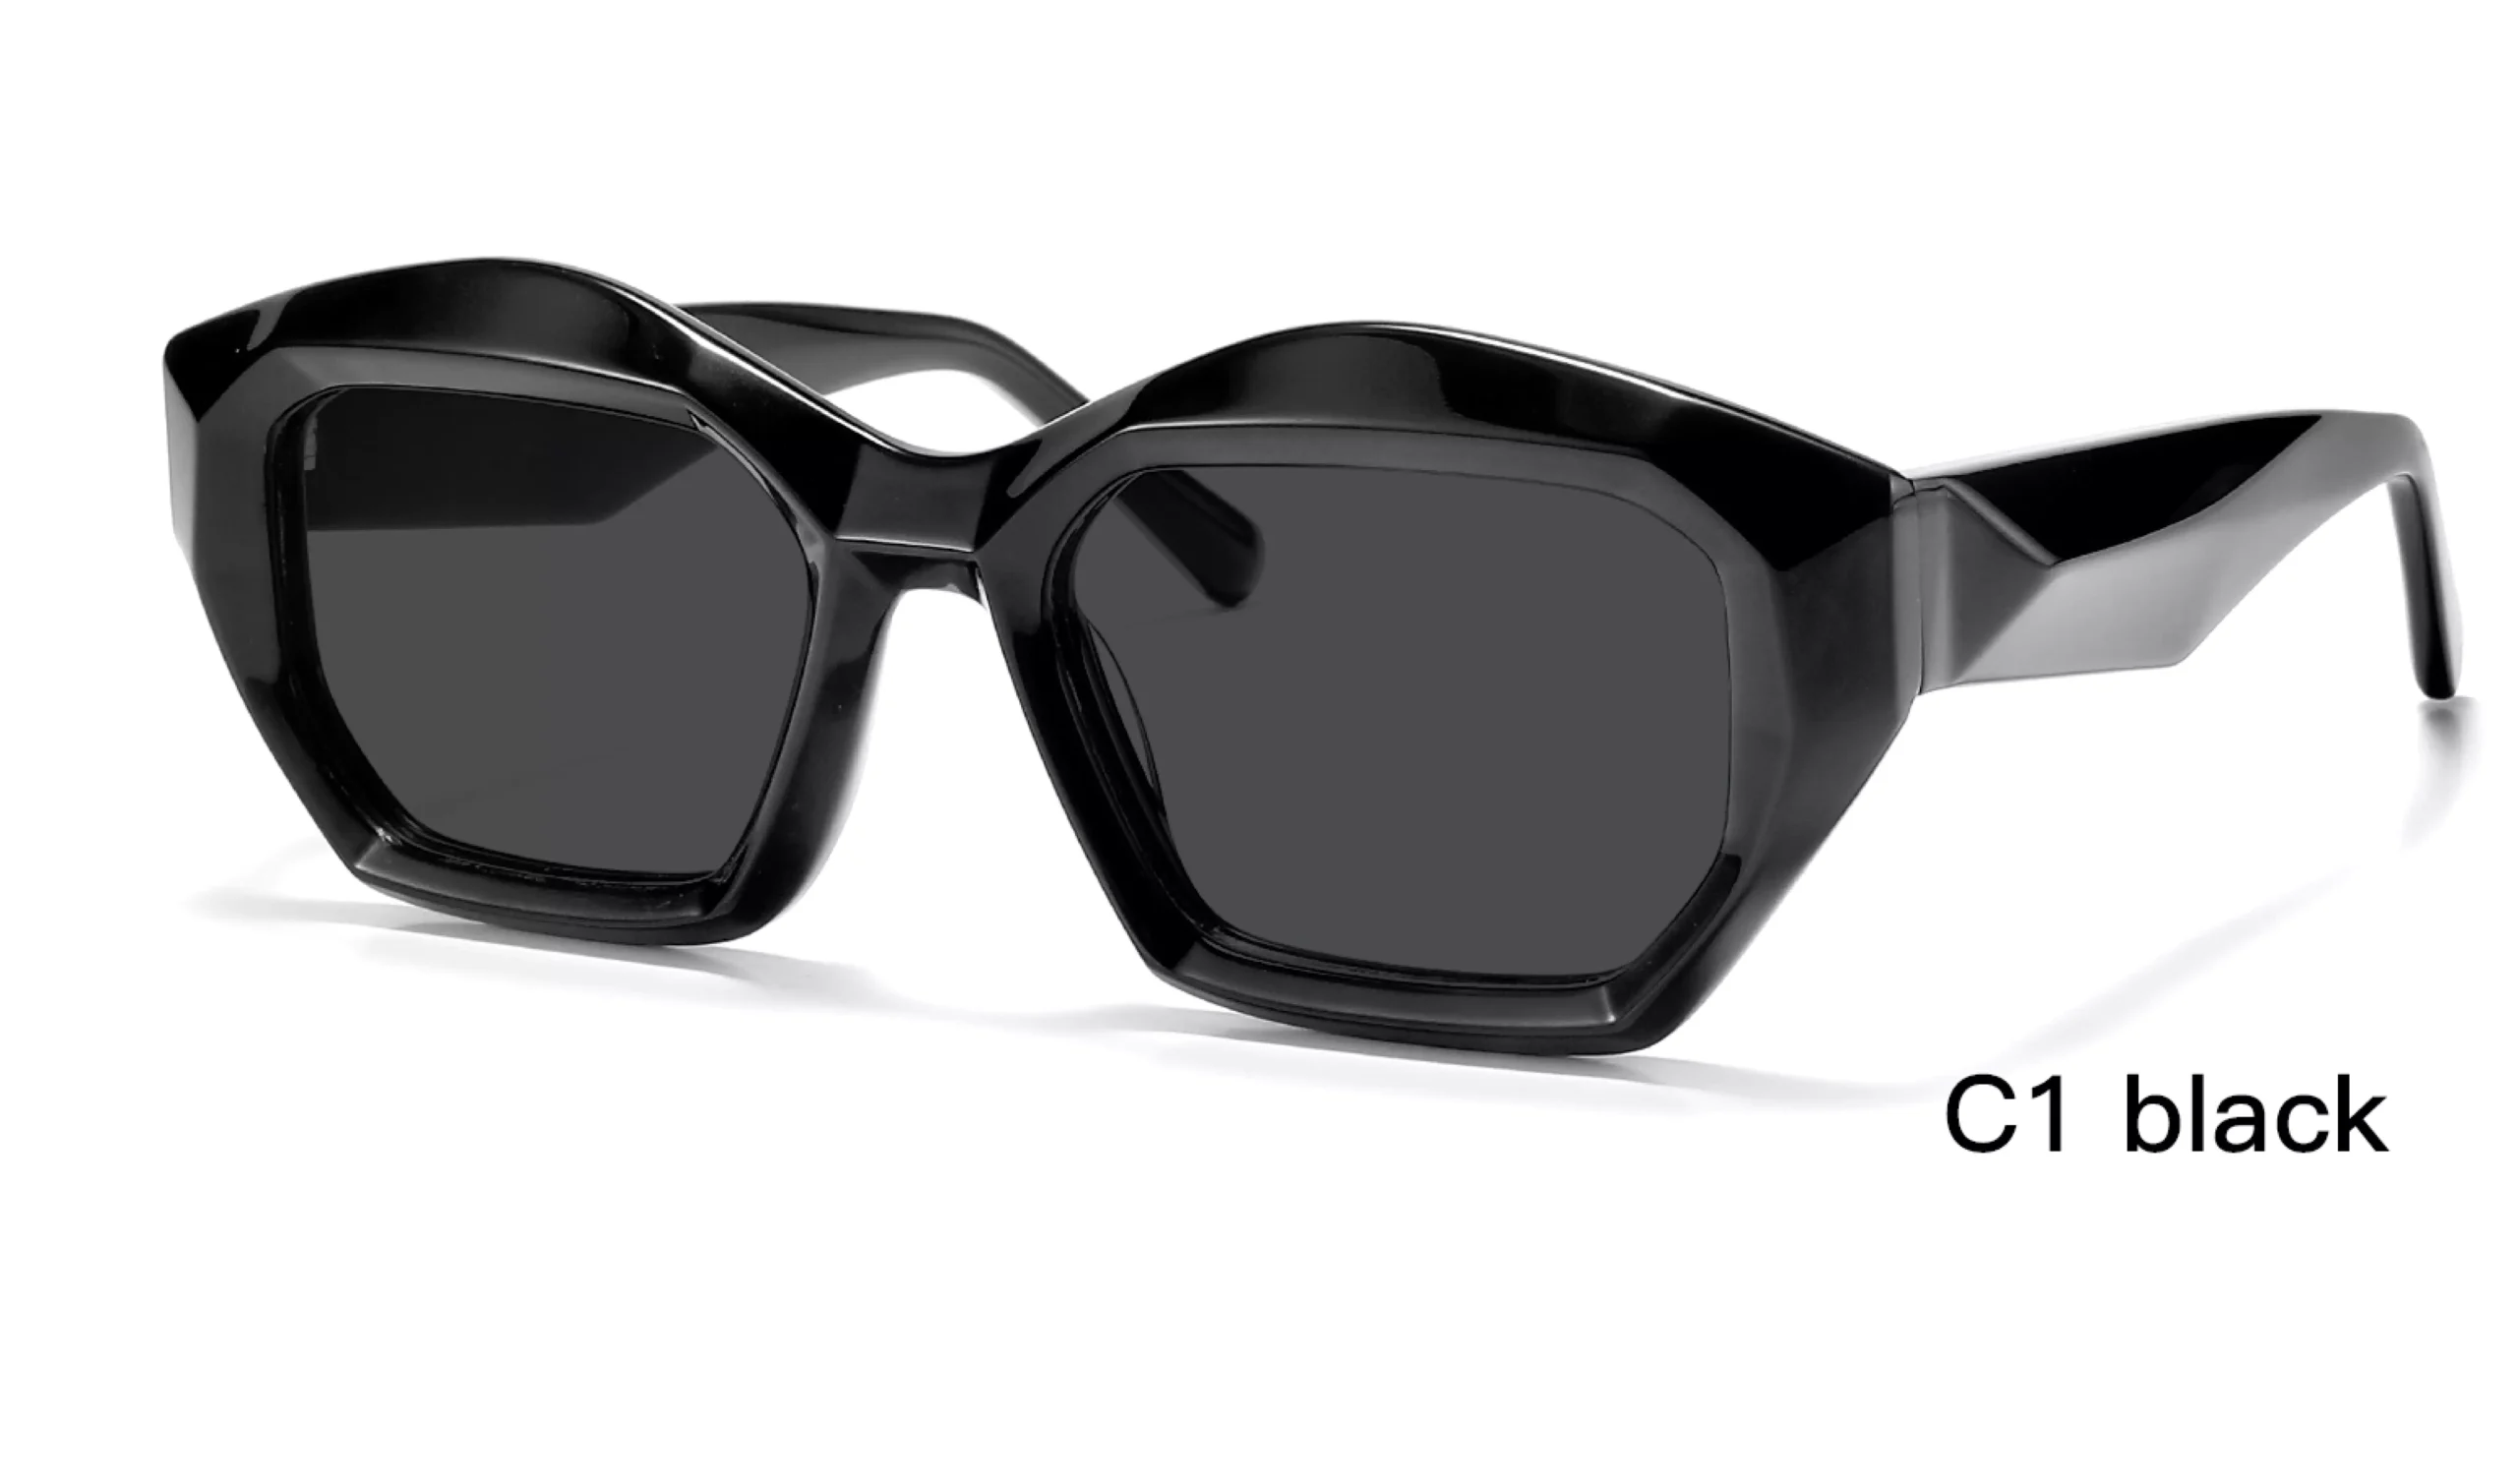 cheap sunglasses, replica designer sunglasses, black, unisex, thick rimmed, made in China